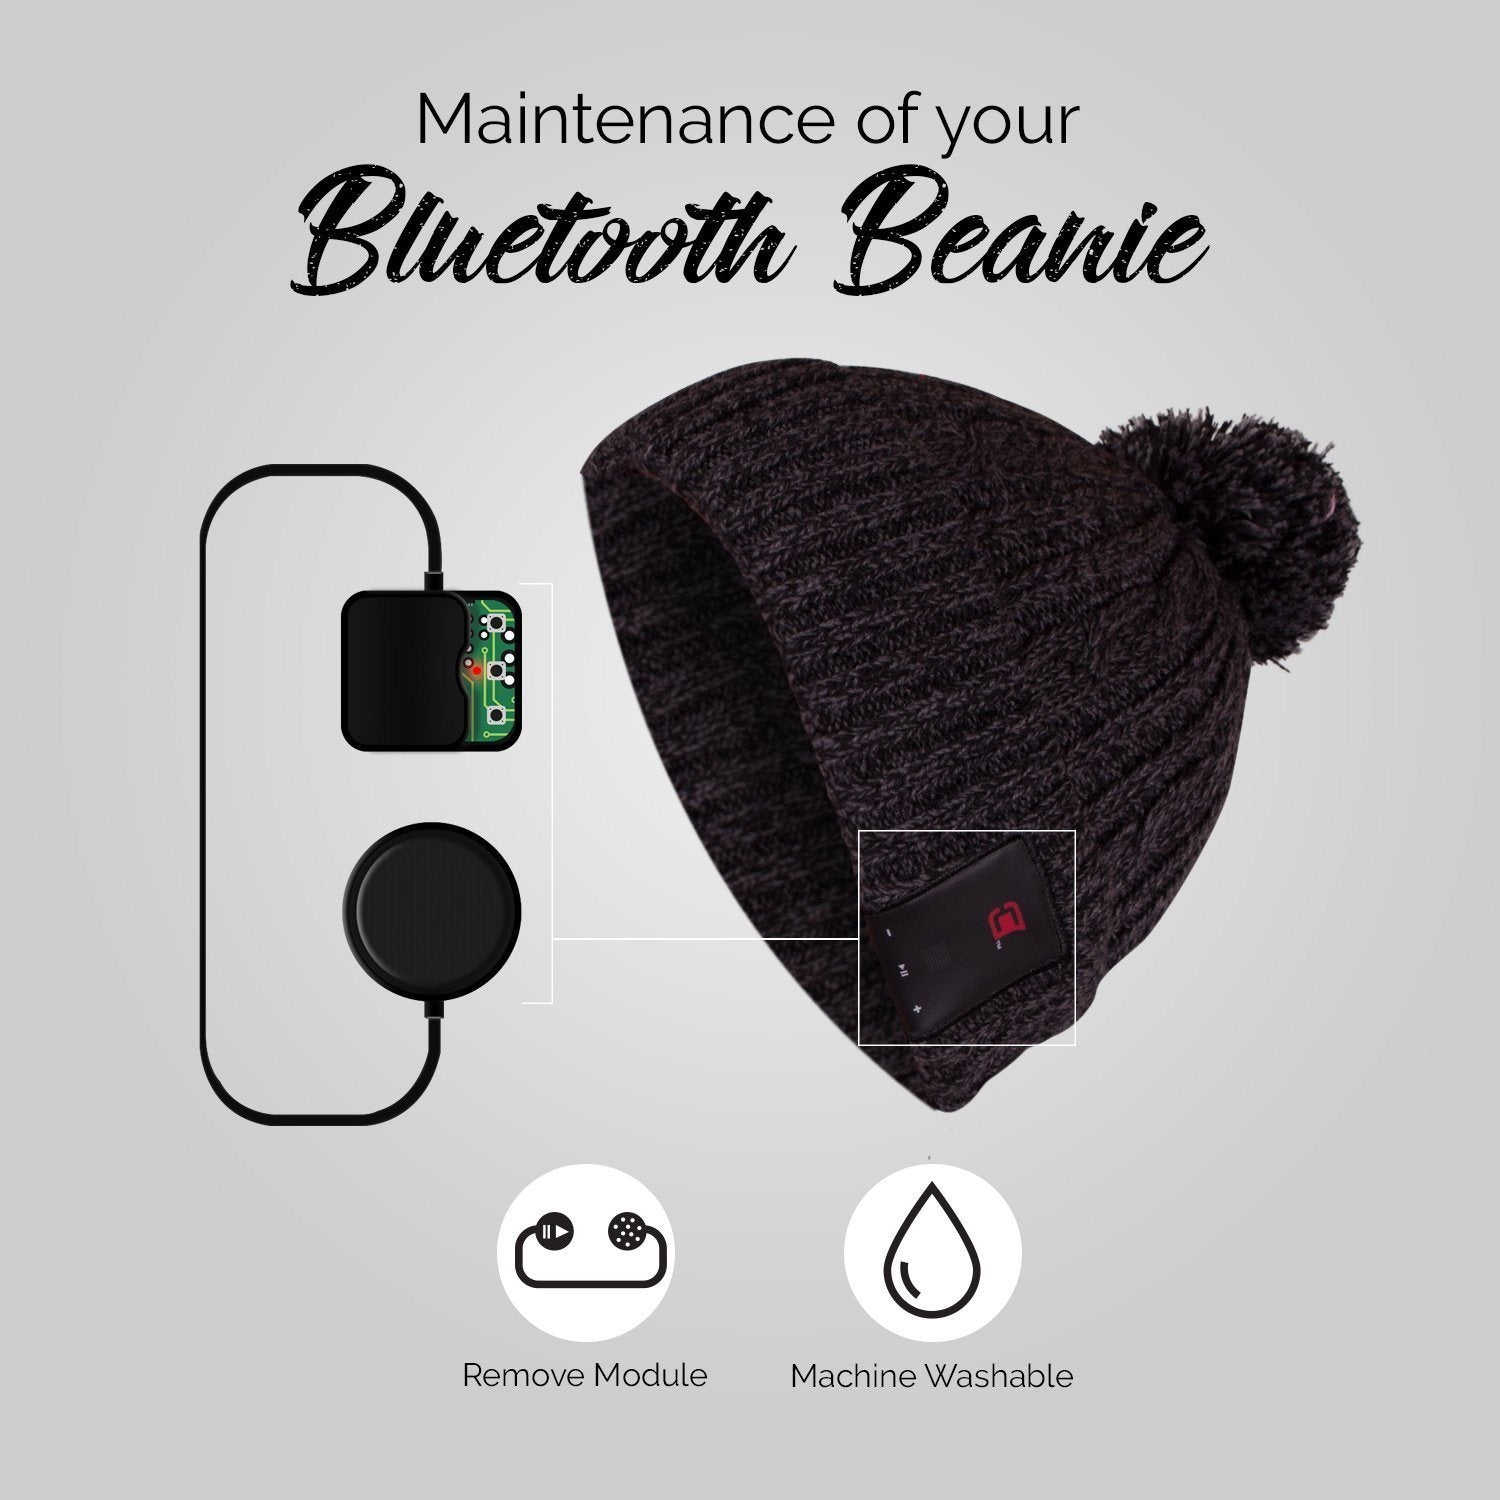 Blu Toque Bluetooth Beanie With Pom Pom - Orange Is The New Black | Caseco Inc. (Maintenance)